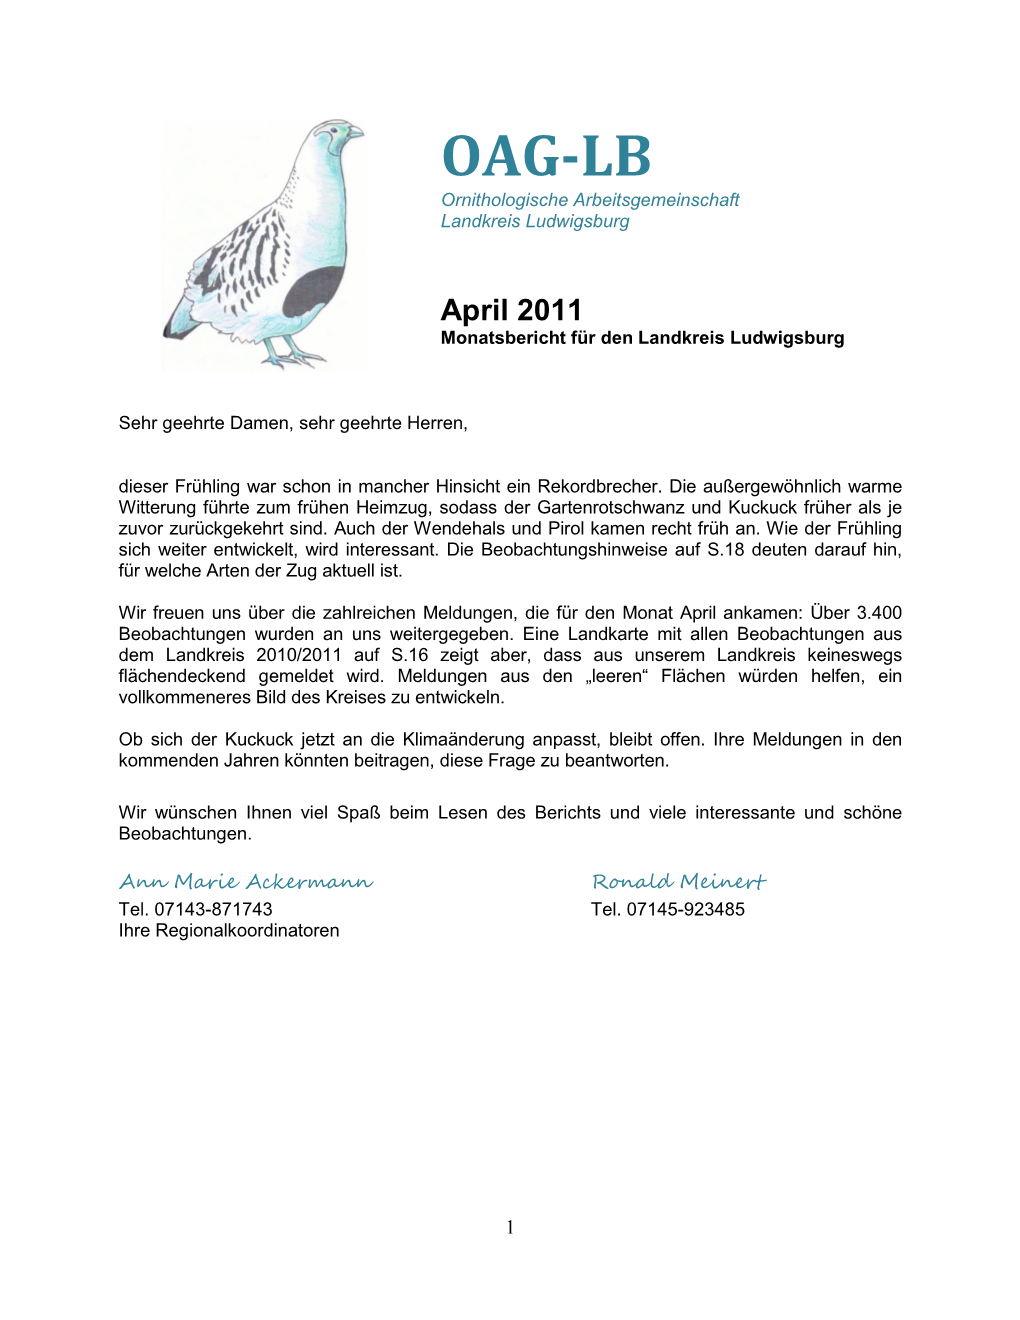 OAG-LB Ornithologische Arbeitsgemeinschaft Landkreis Ludwigsburg